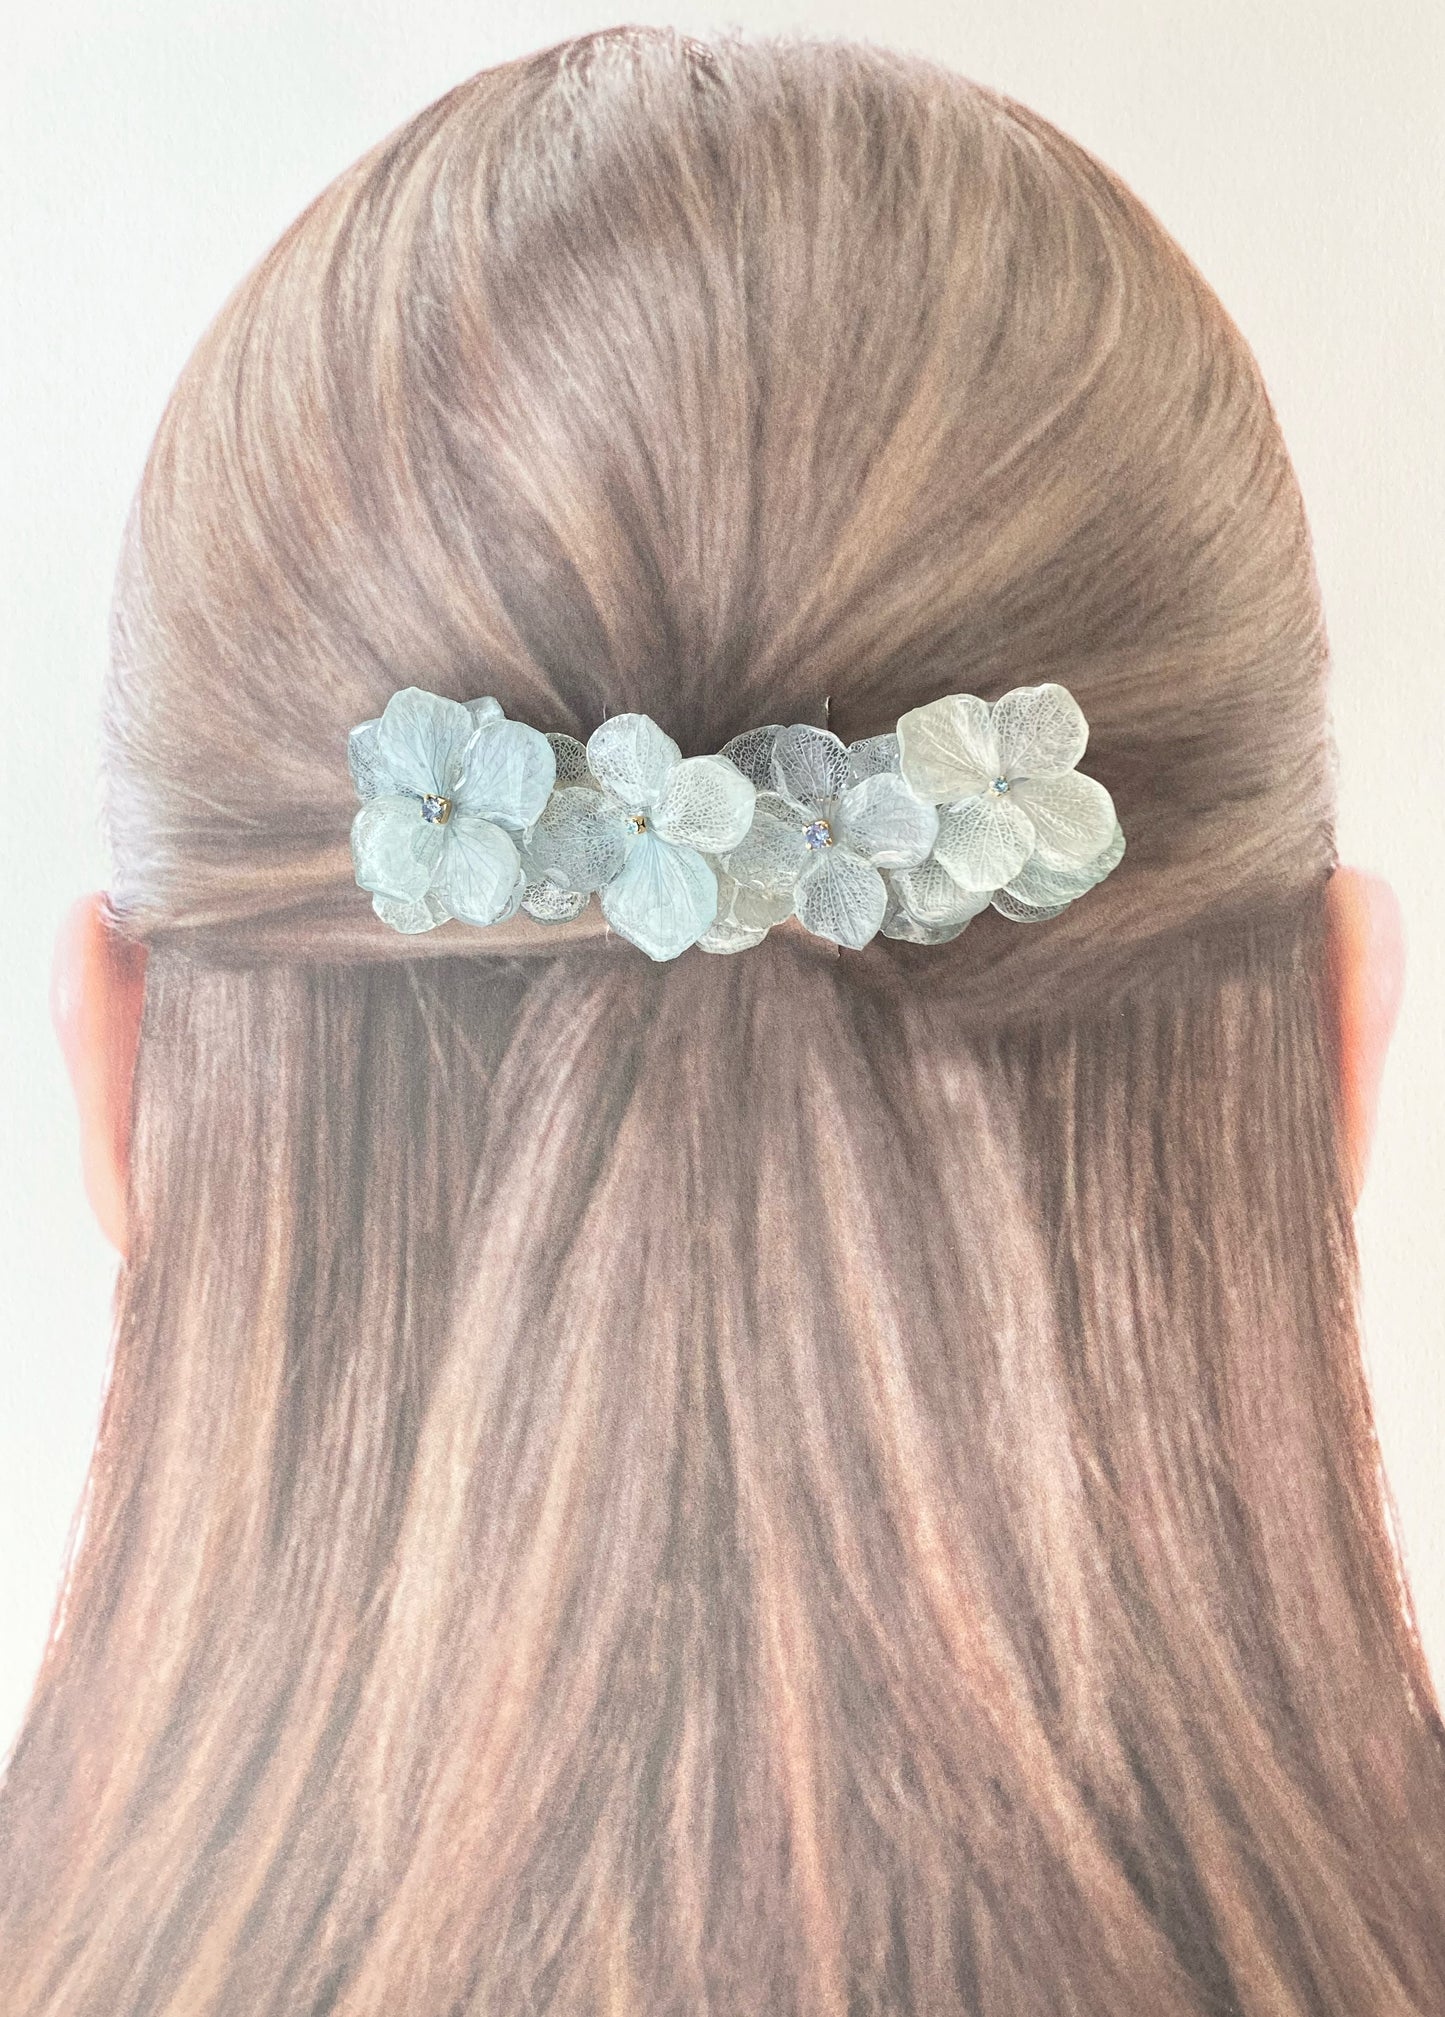 Light blue hydrangea hair clip large